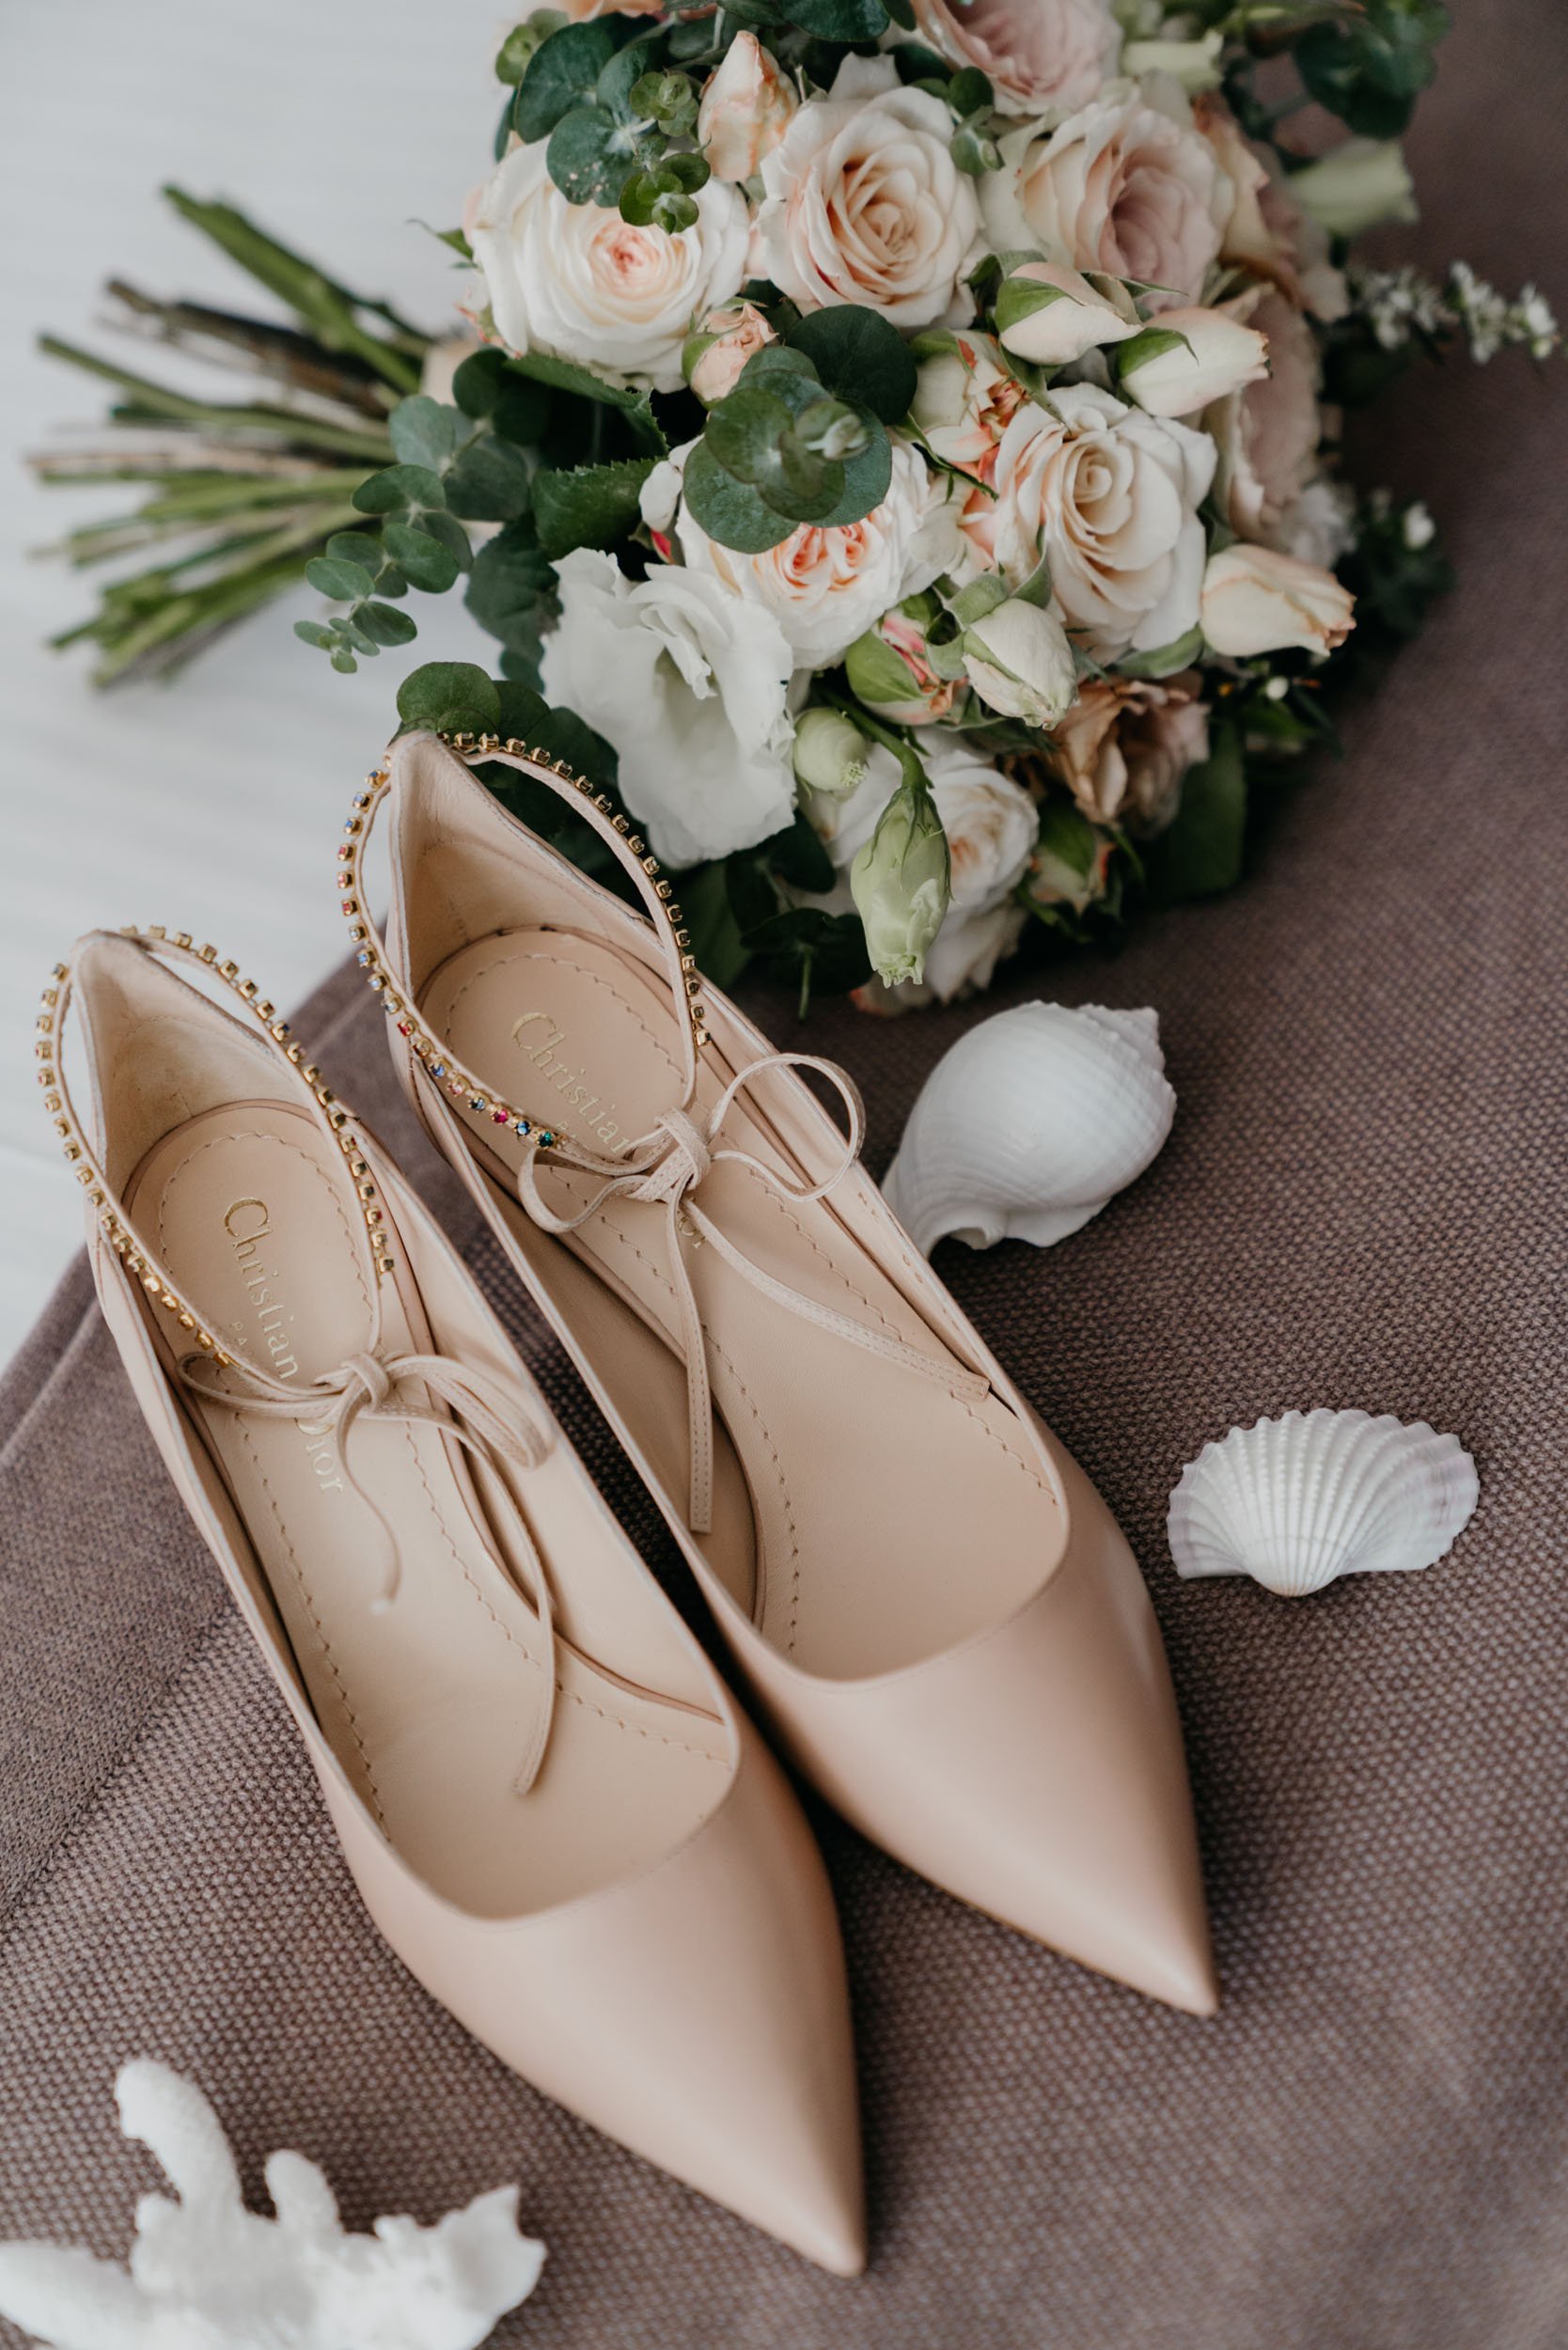 Rick & Fiona - Wedding shoes